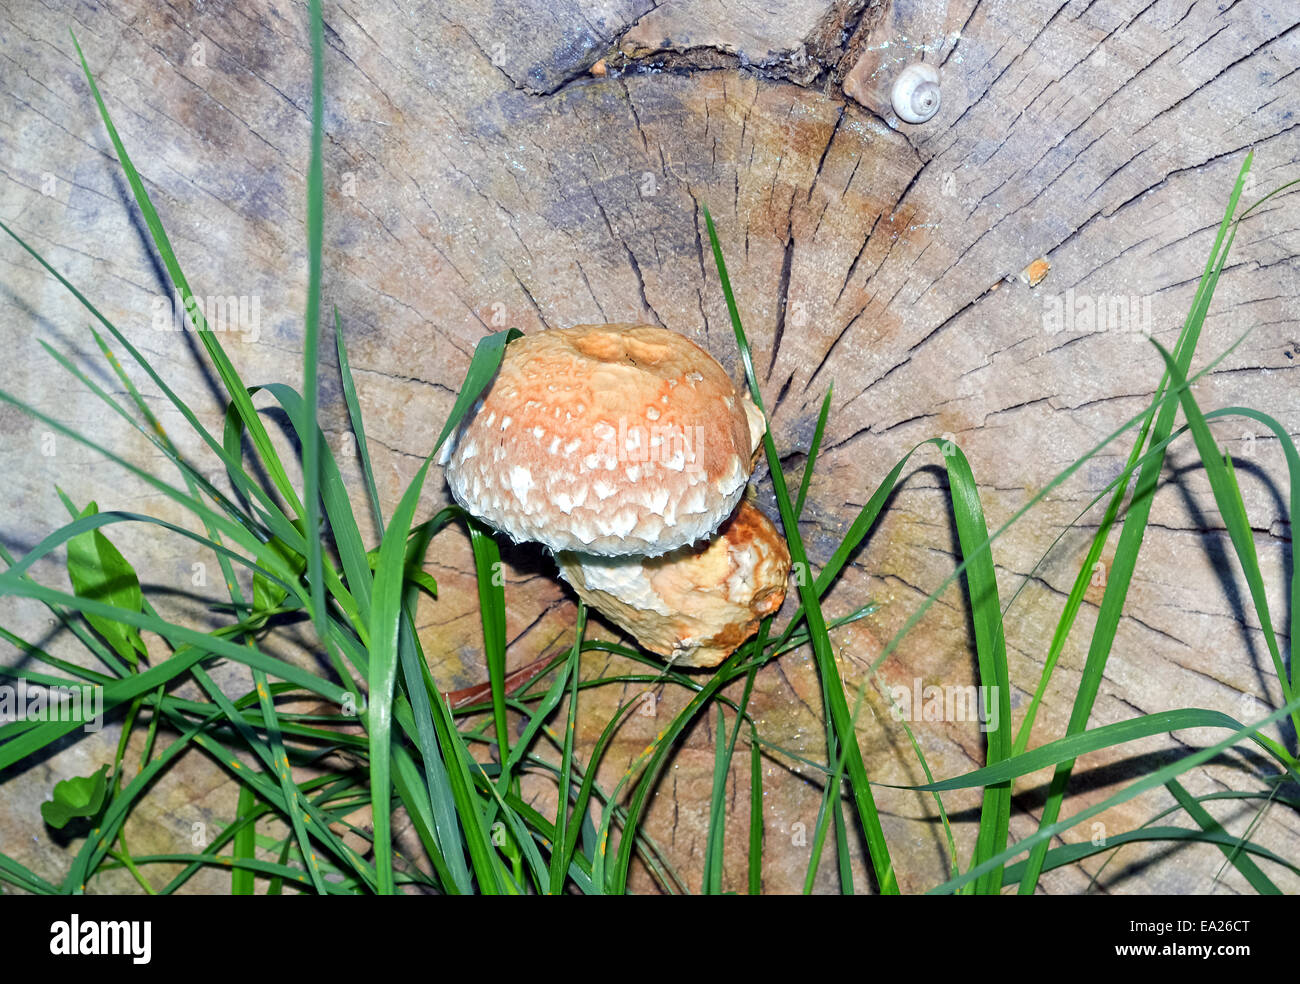 Inedible mushroom growing on a tree stump Stock Photo